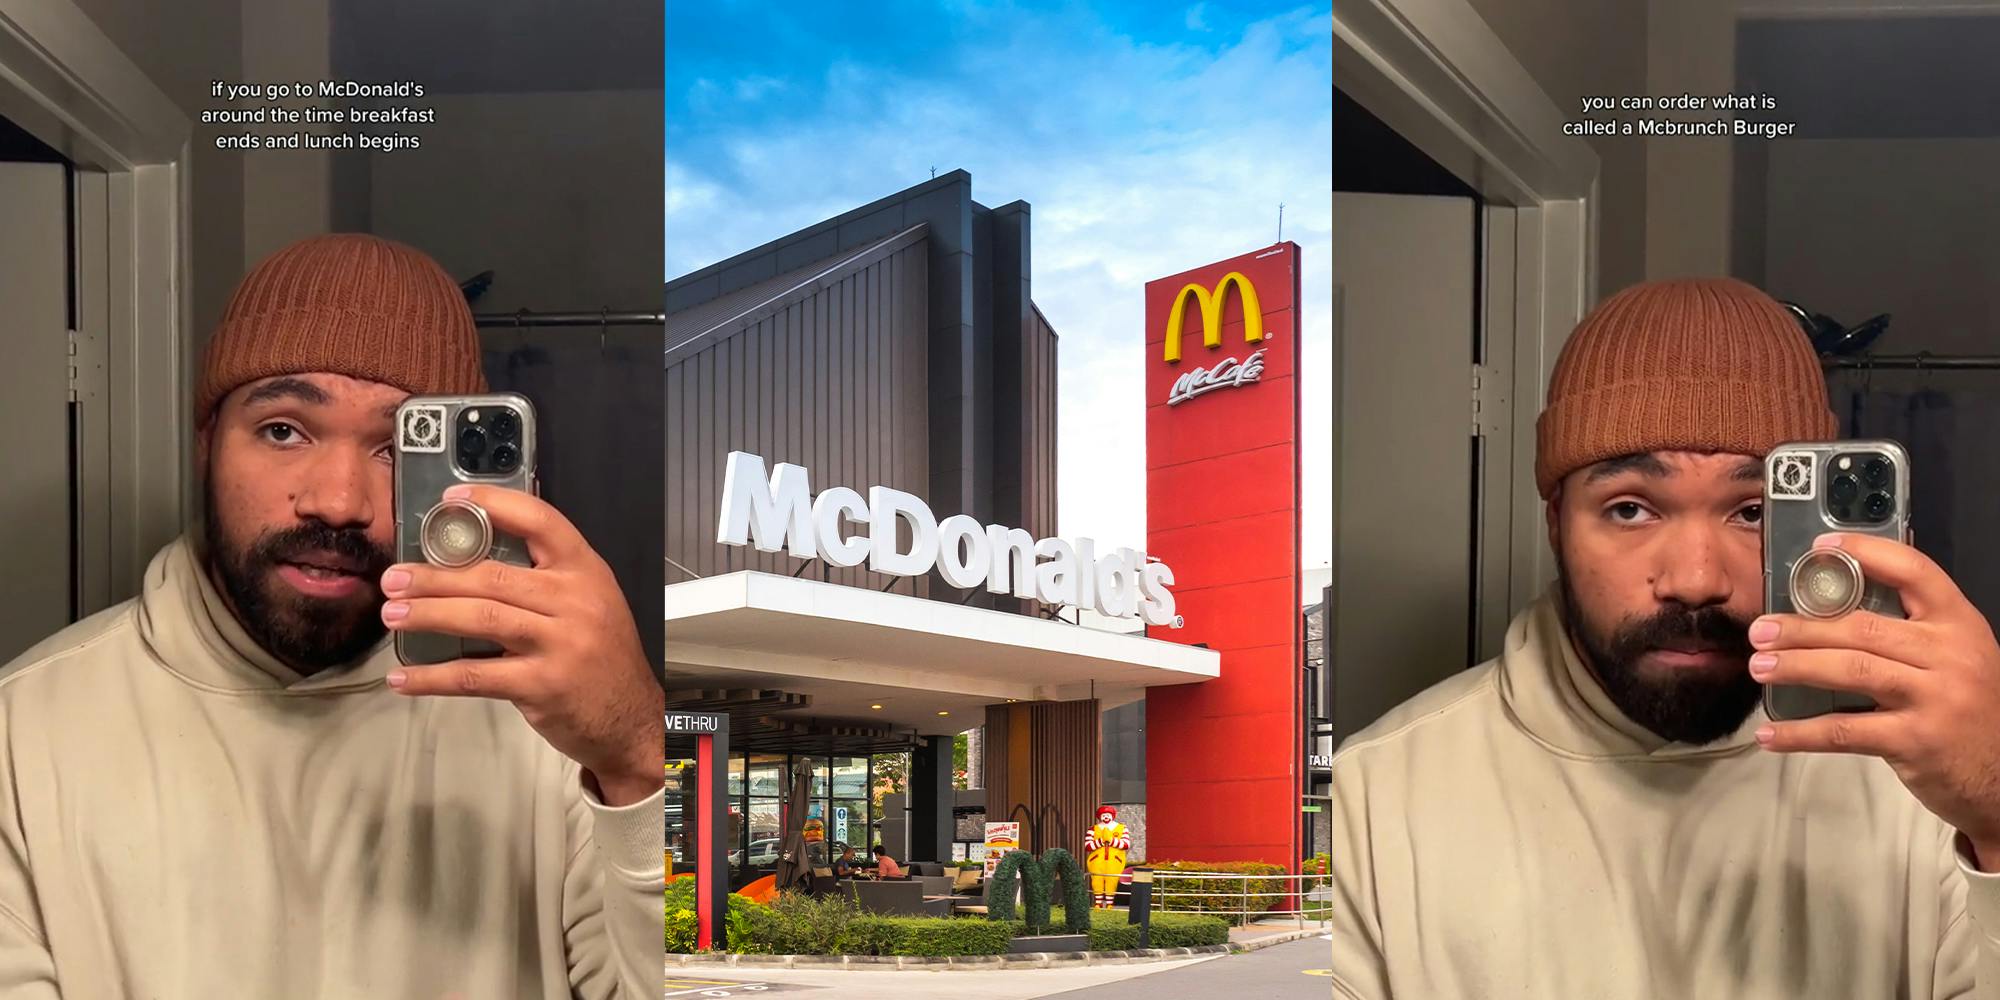 jordan_the_stallion8 tiktoker shares McDonalds Fast Food secret hack called mcbrunch burger